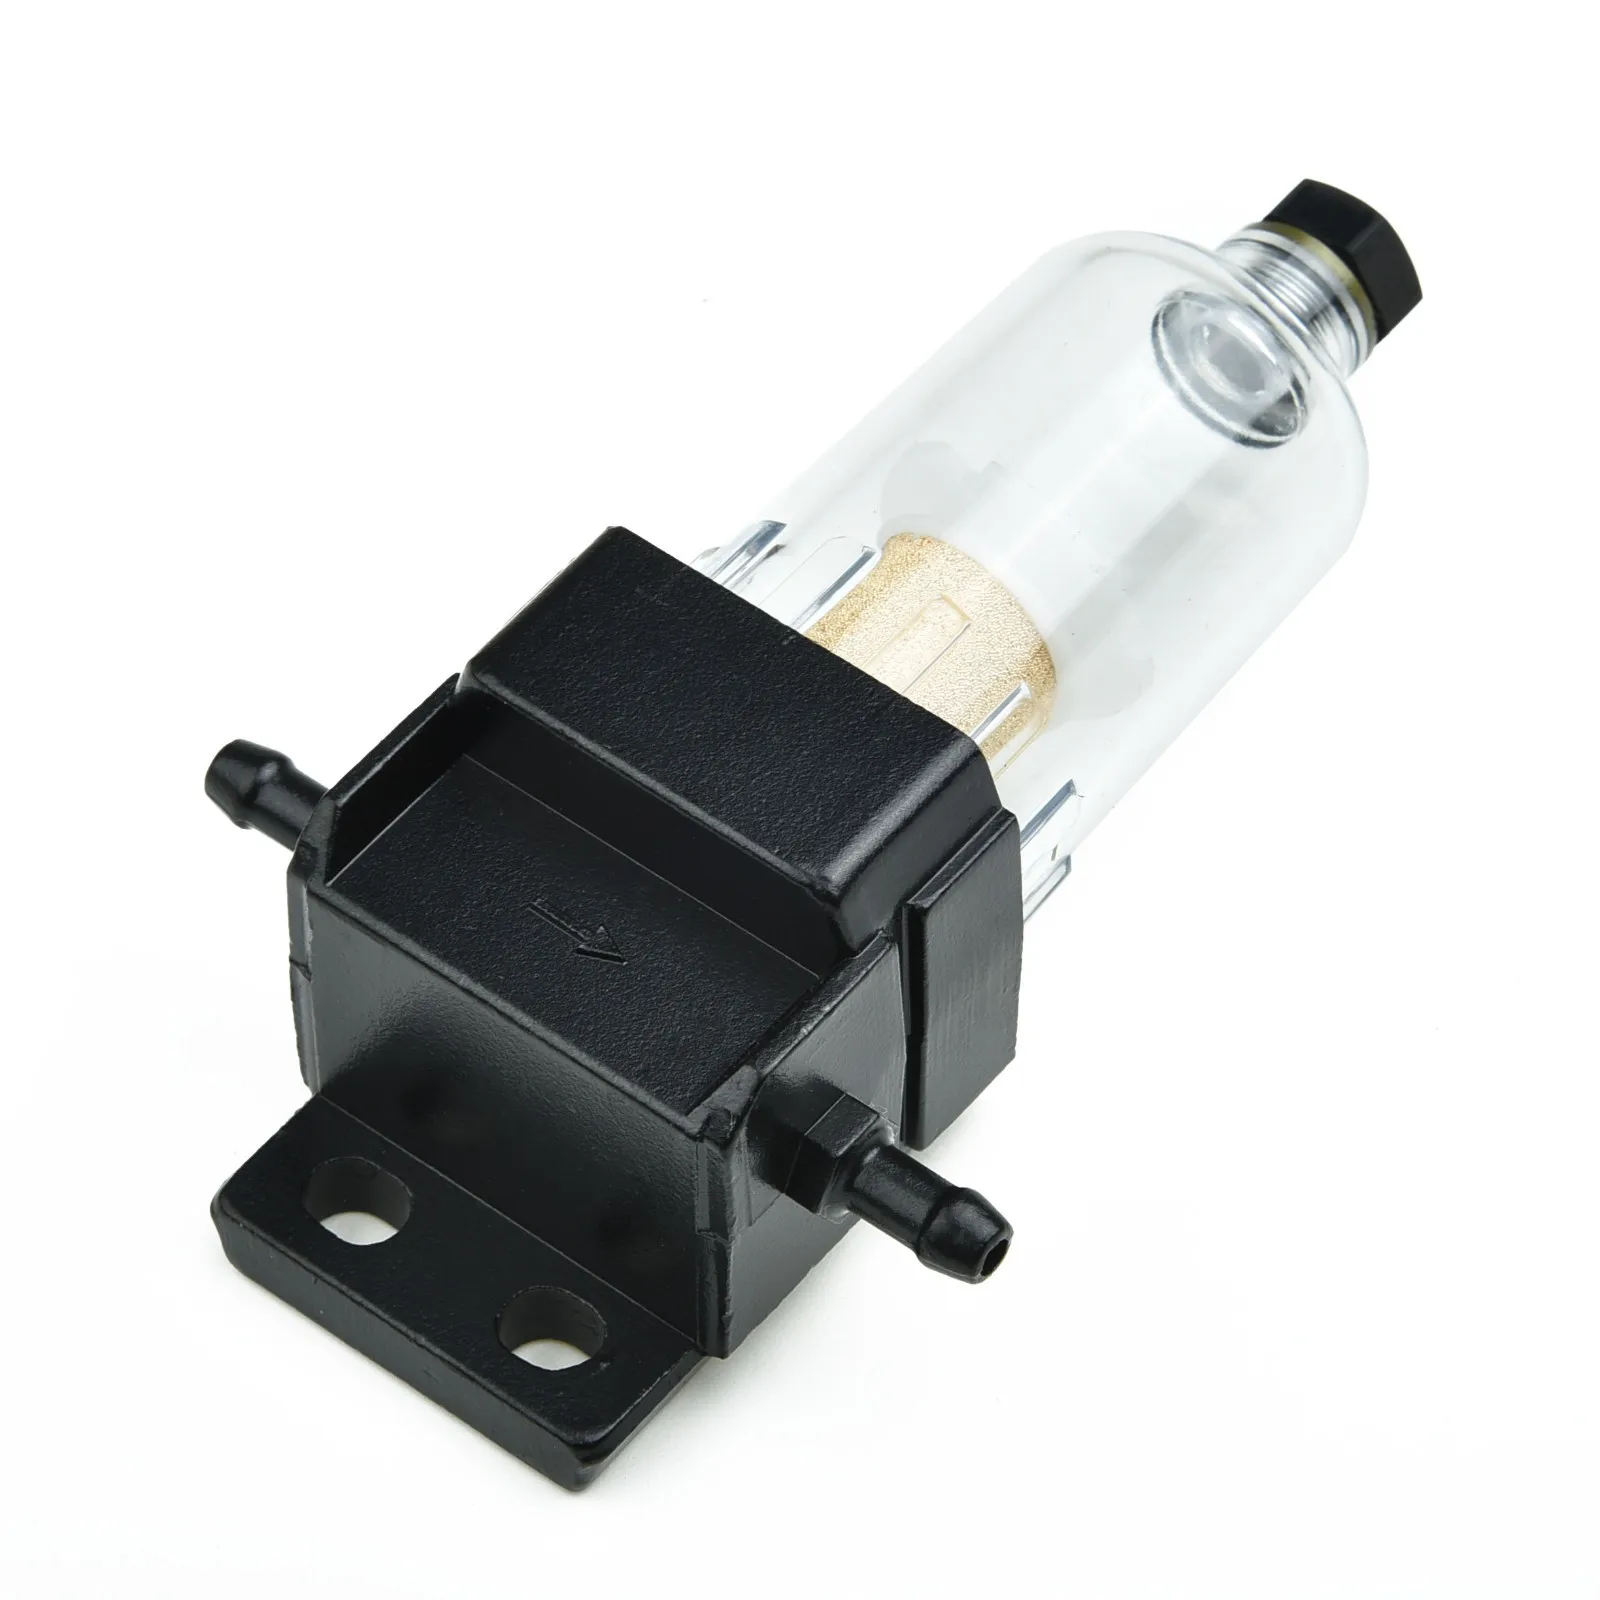 

1Pc Car Fuel Filter Water Separator Replacement (Diesel & Biodiesel) Fits For Webasto Espar Heaters Auto Filter Accessories